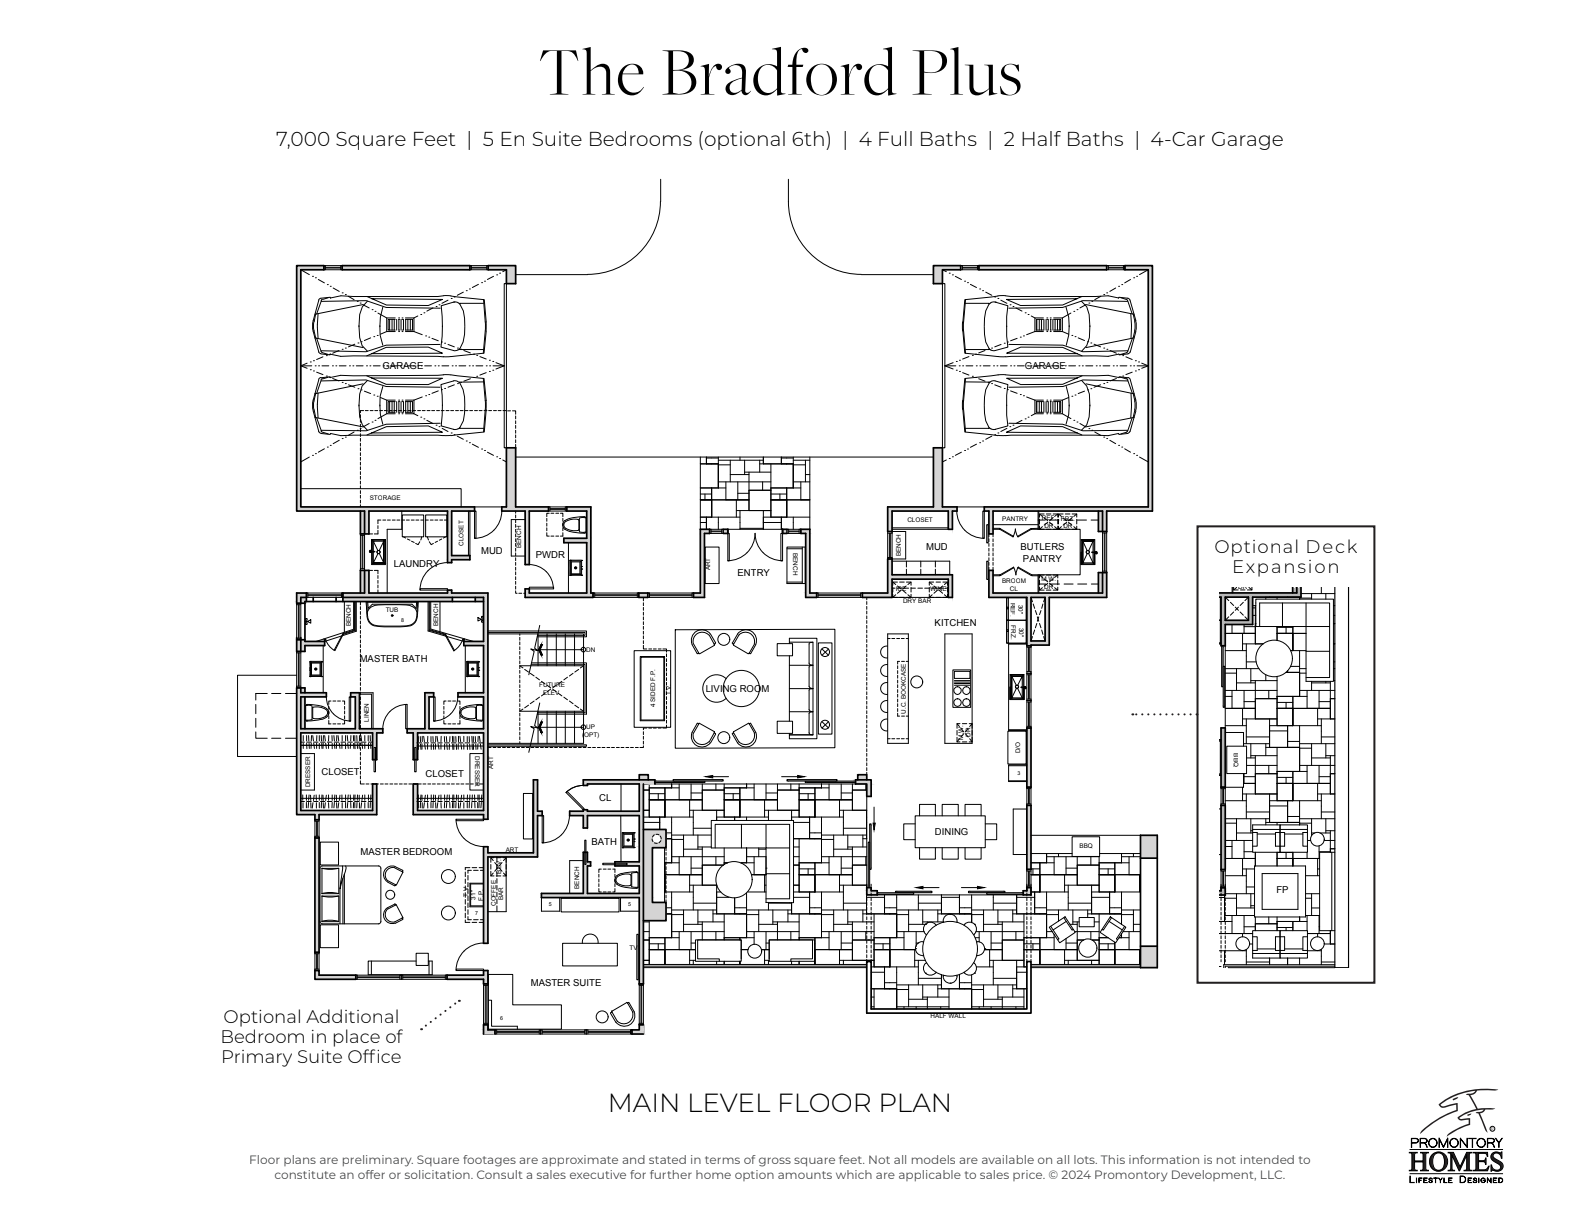 Promontory homes - The Bradford Plus